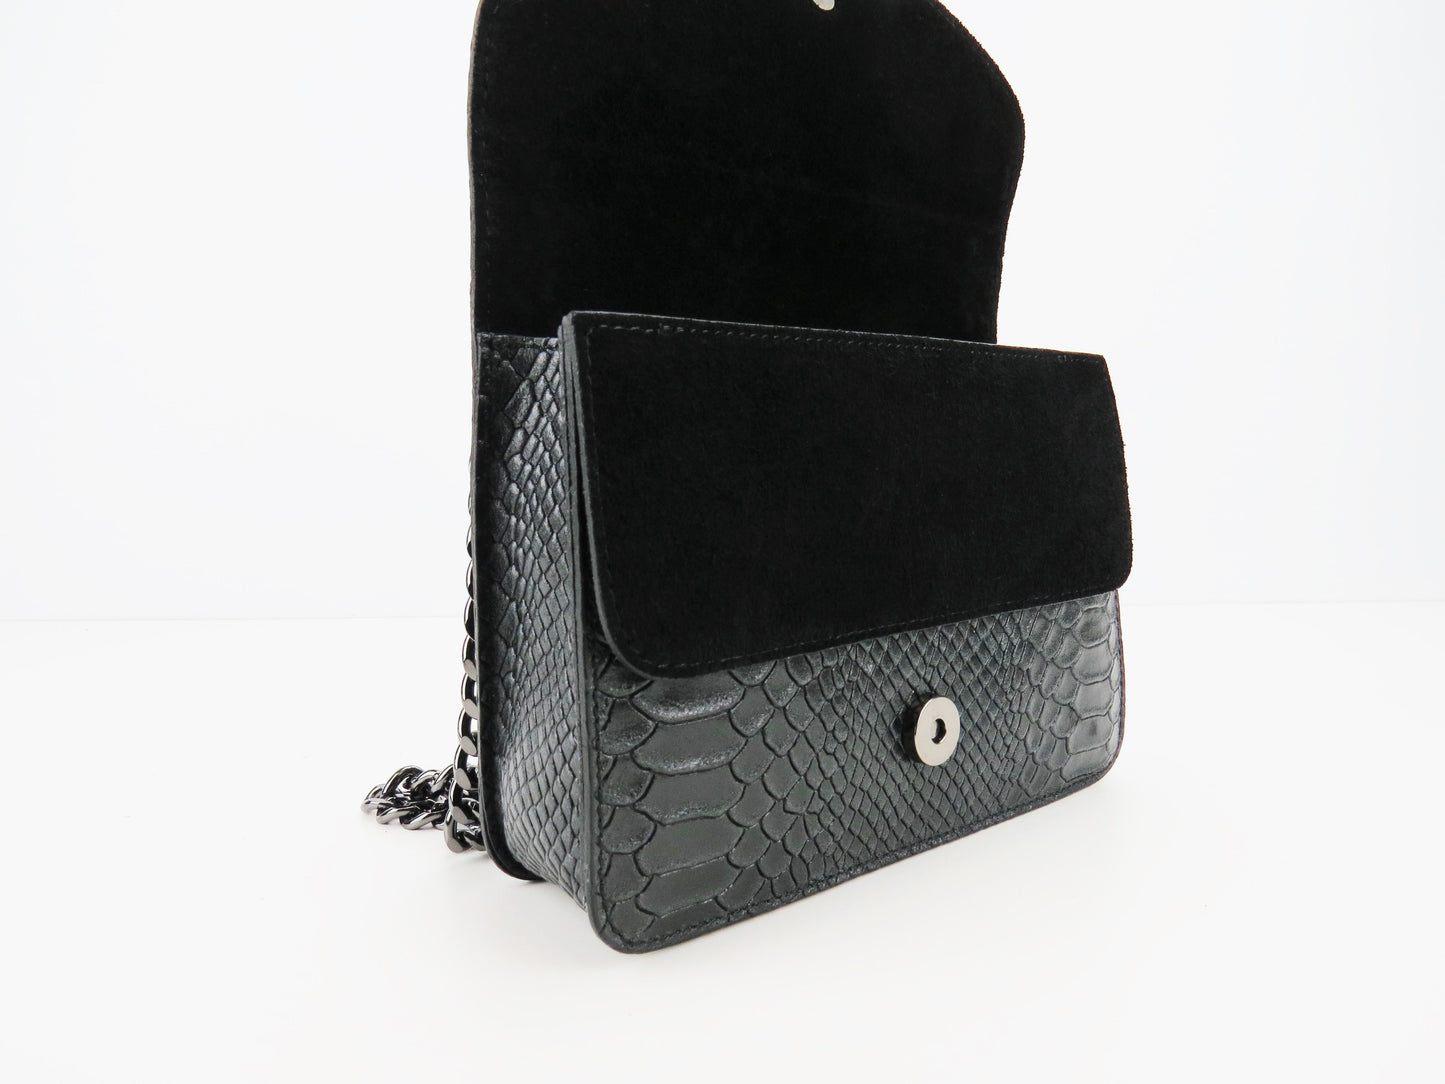 Genuine Leather Snake Effect Black Handbag Christmas Present For Her